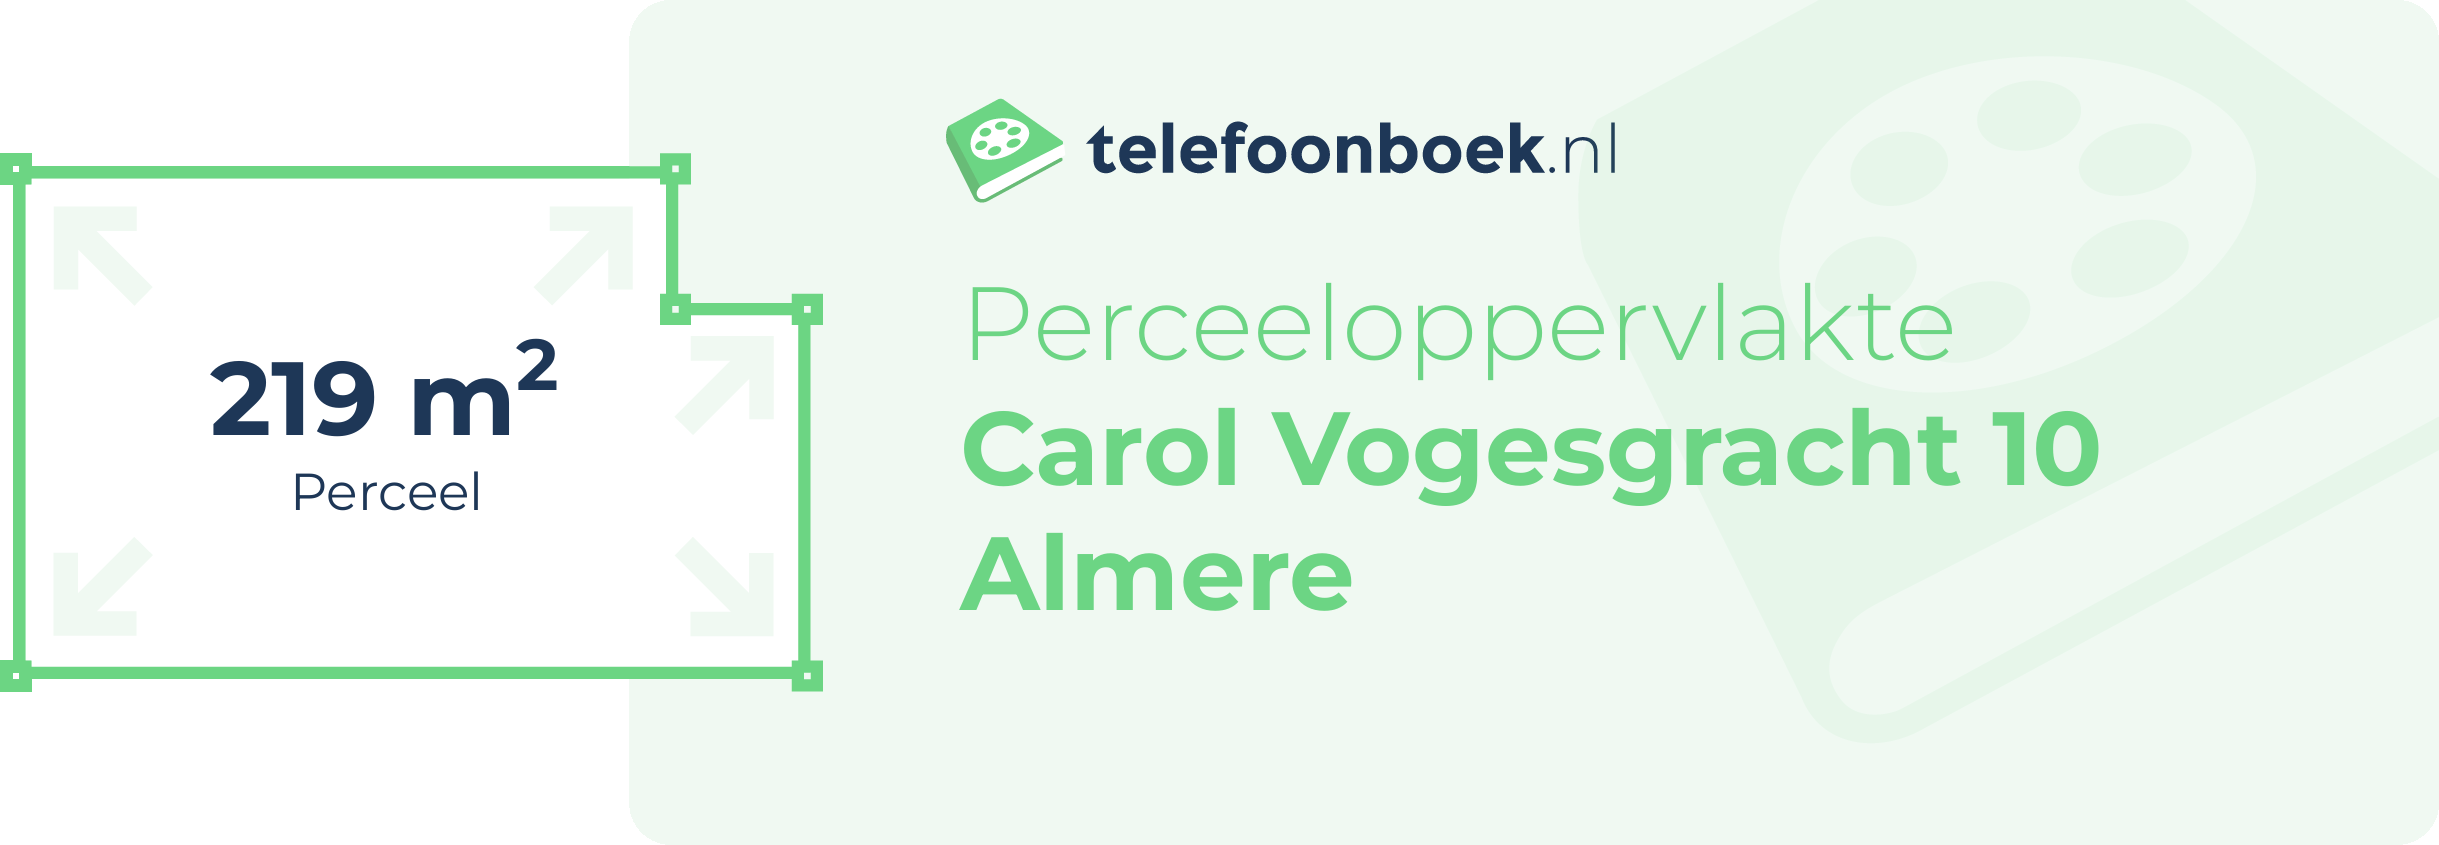 Perceeloppervlakte Carol Vogesgracht 10 Almere